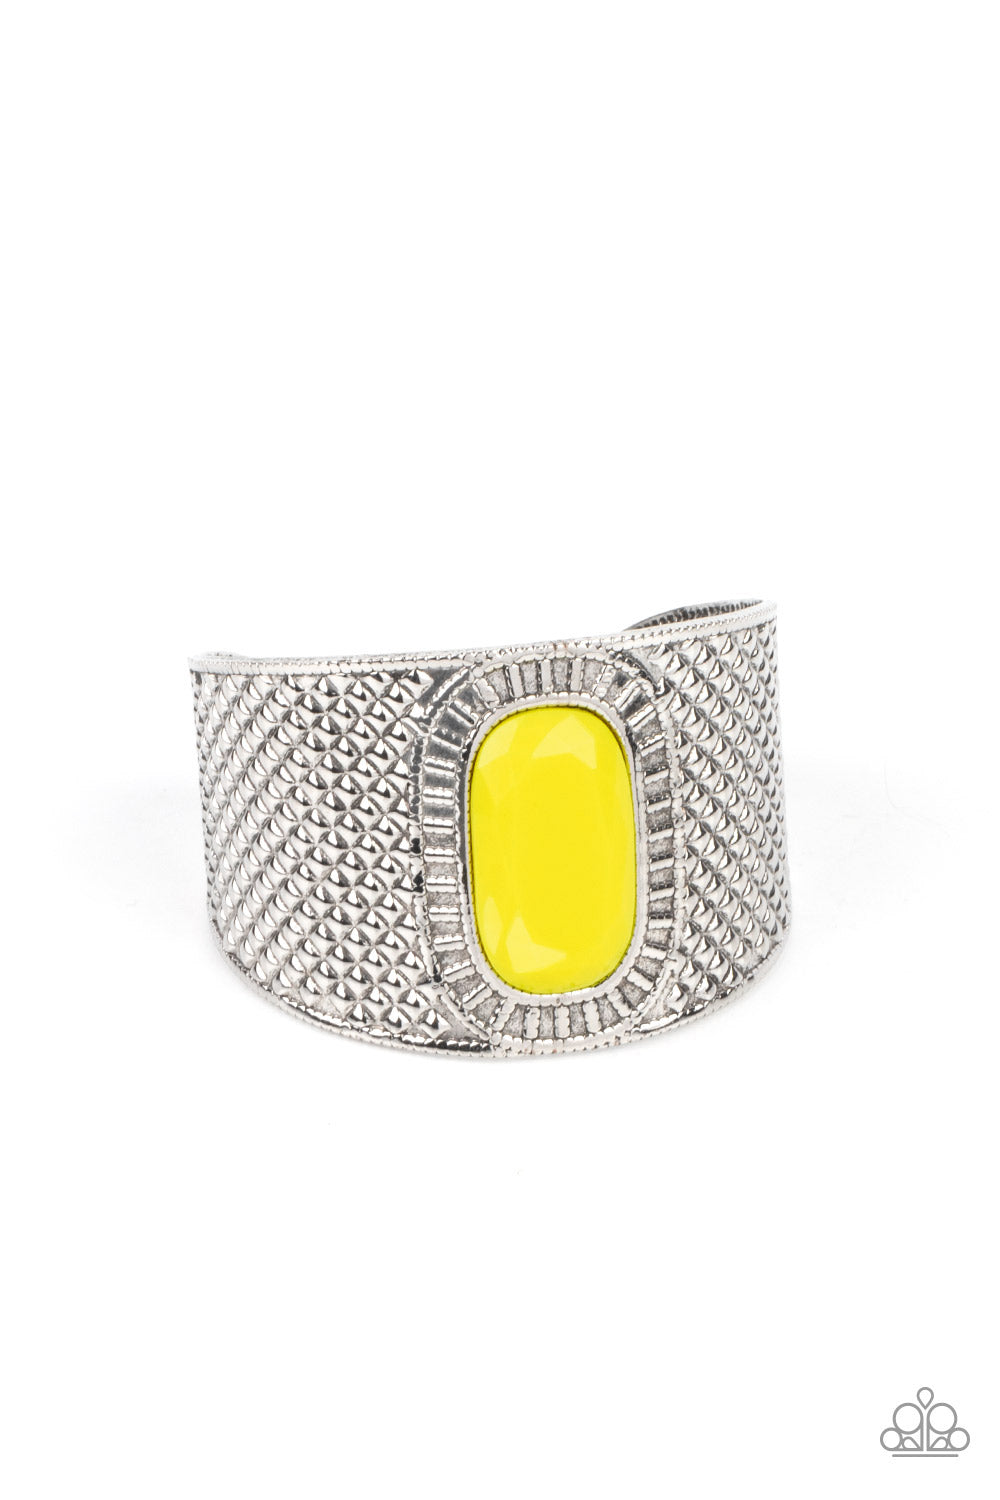 Paparazzi Poshly Pharaoh - Yellow Bracelet - A Finishing Touch Jewelry